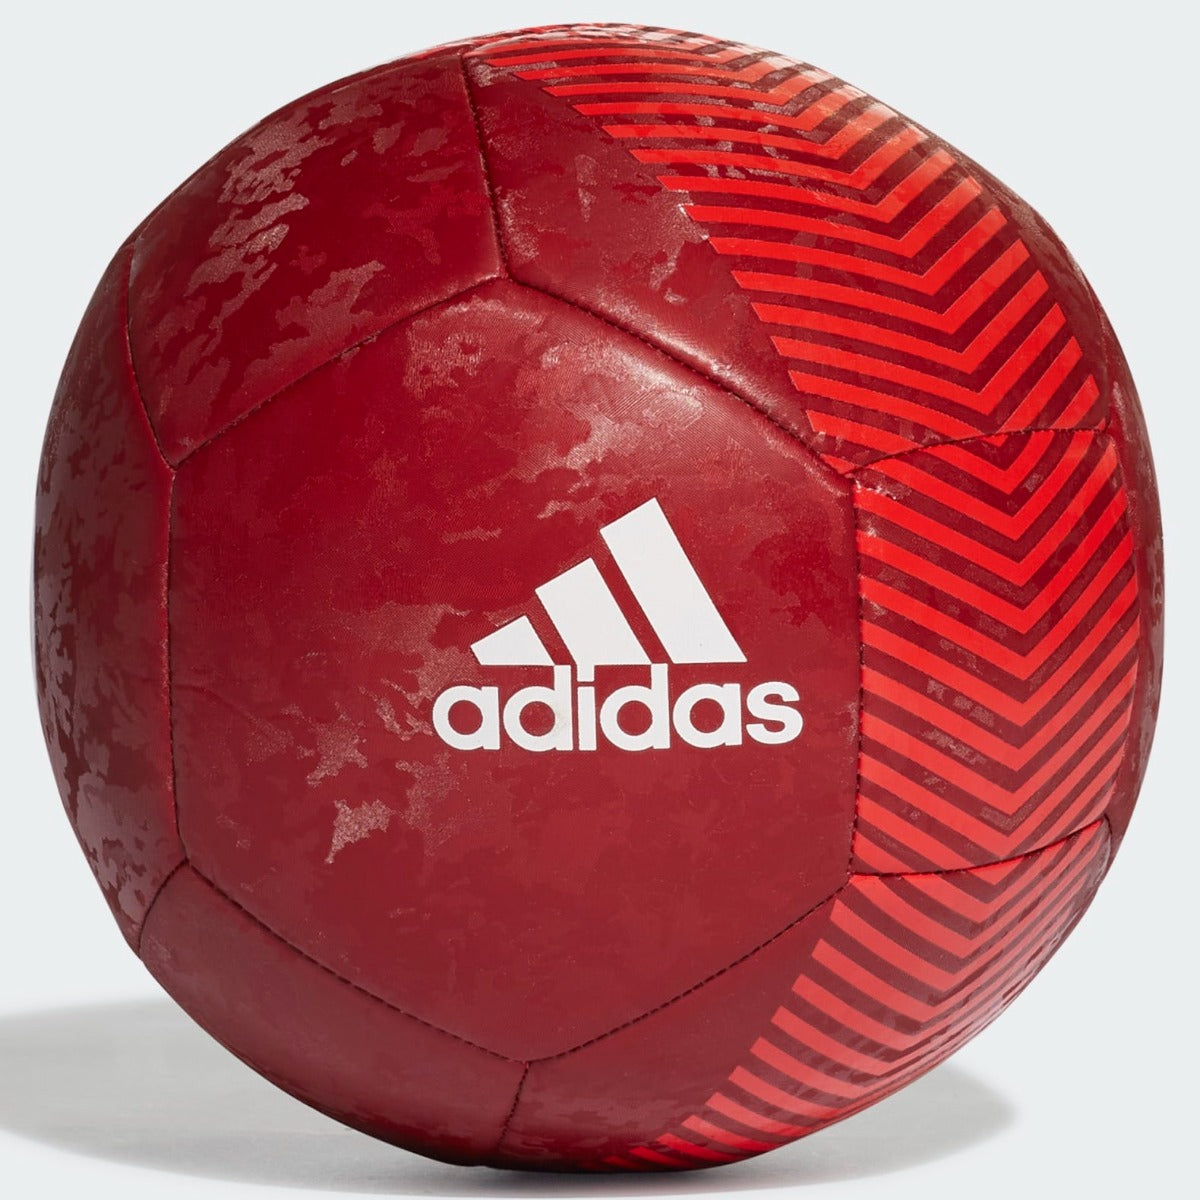 Adidas 2021-22 Bayern Munich Home Club Ball - Red (Back)